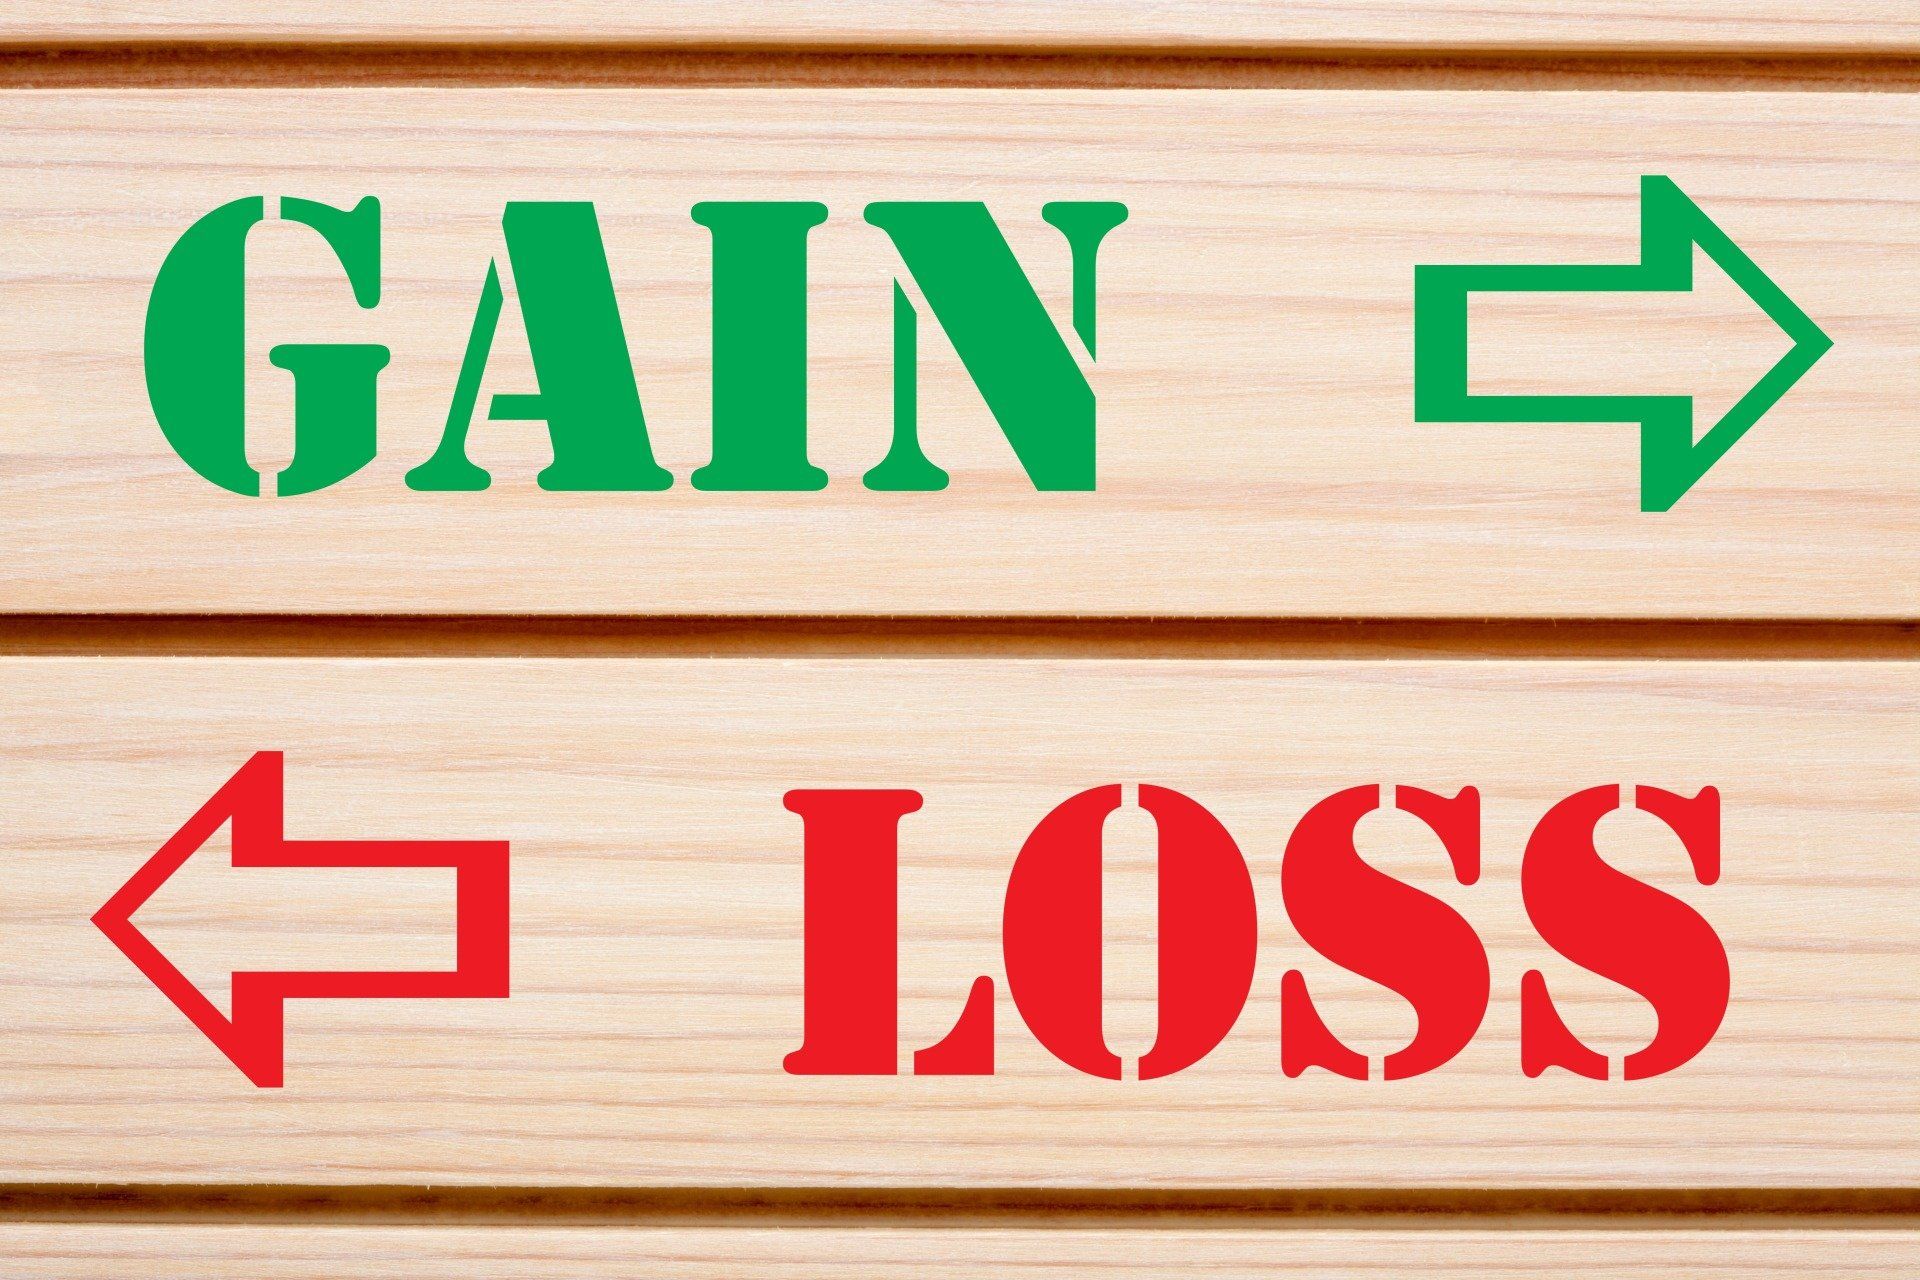 Capital Gains vs Capital Loss